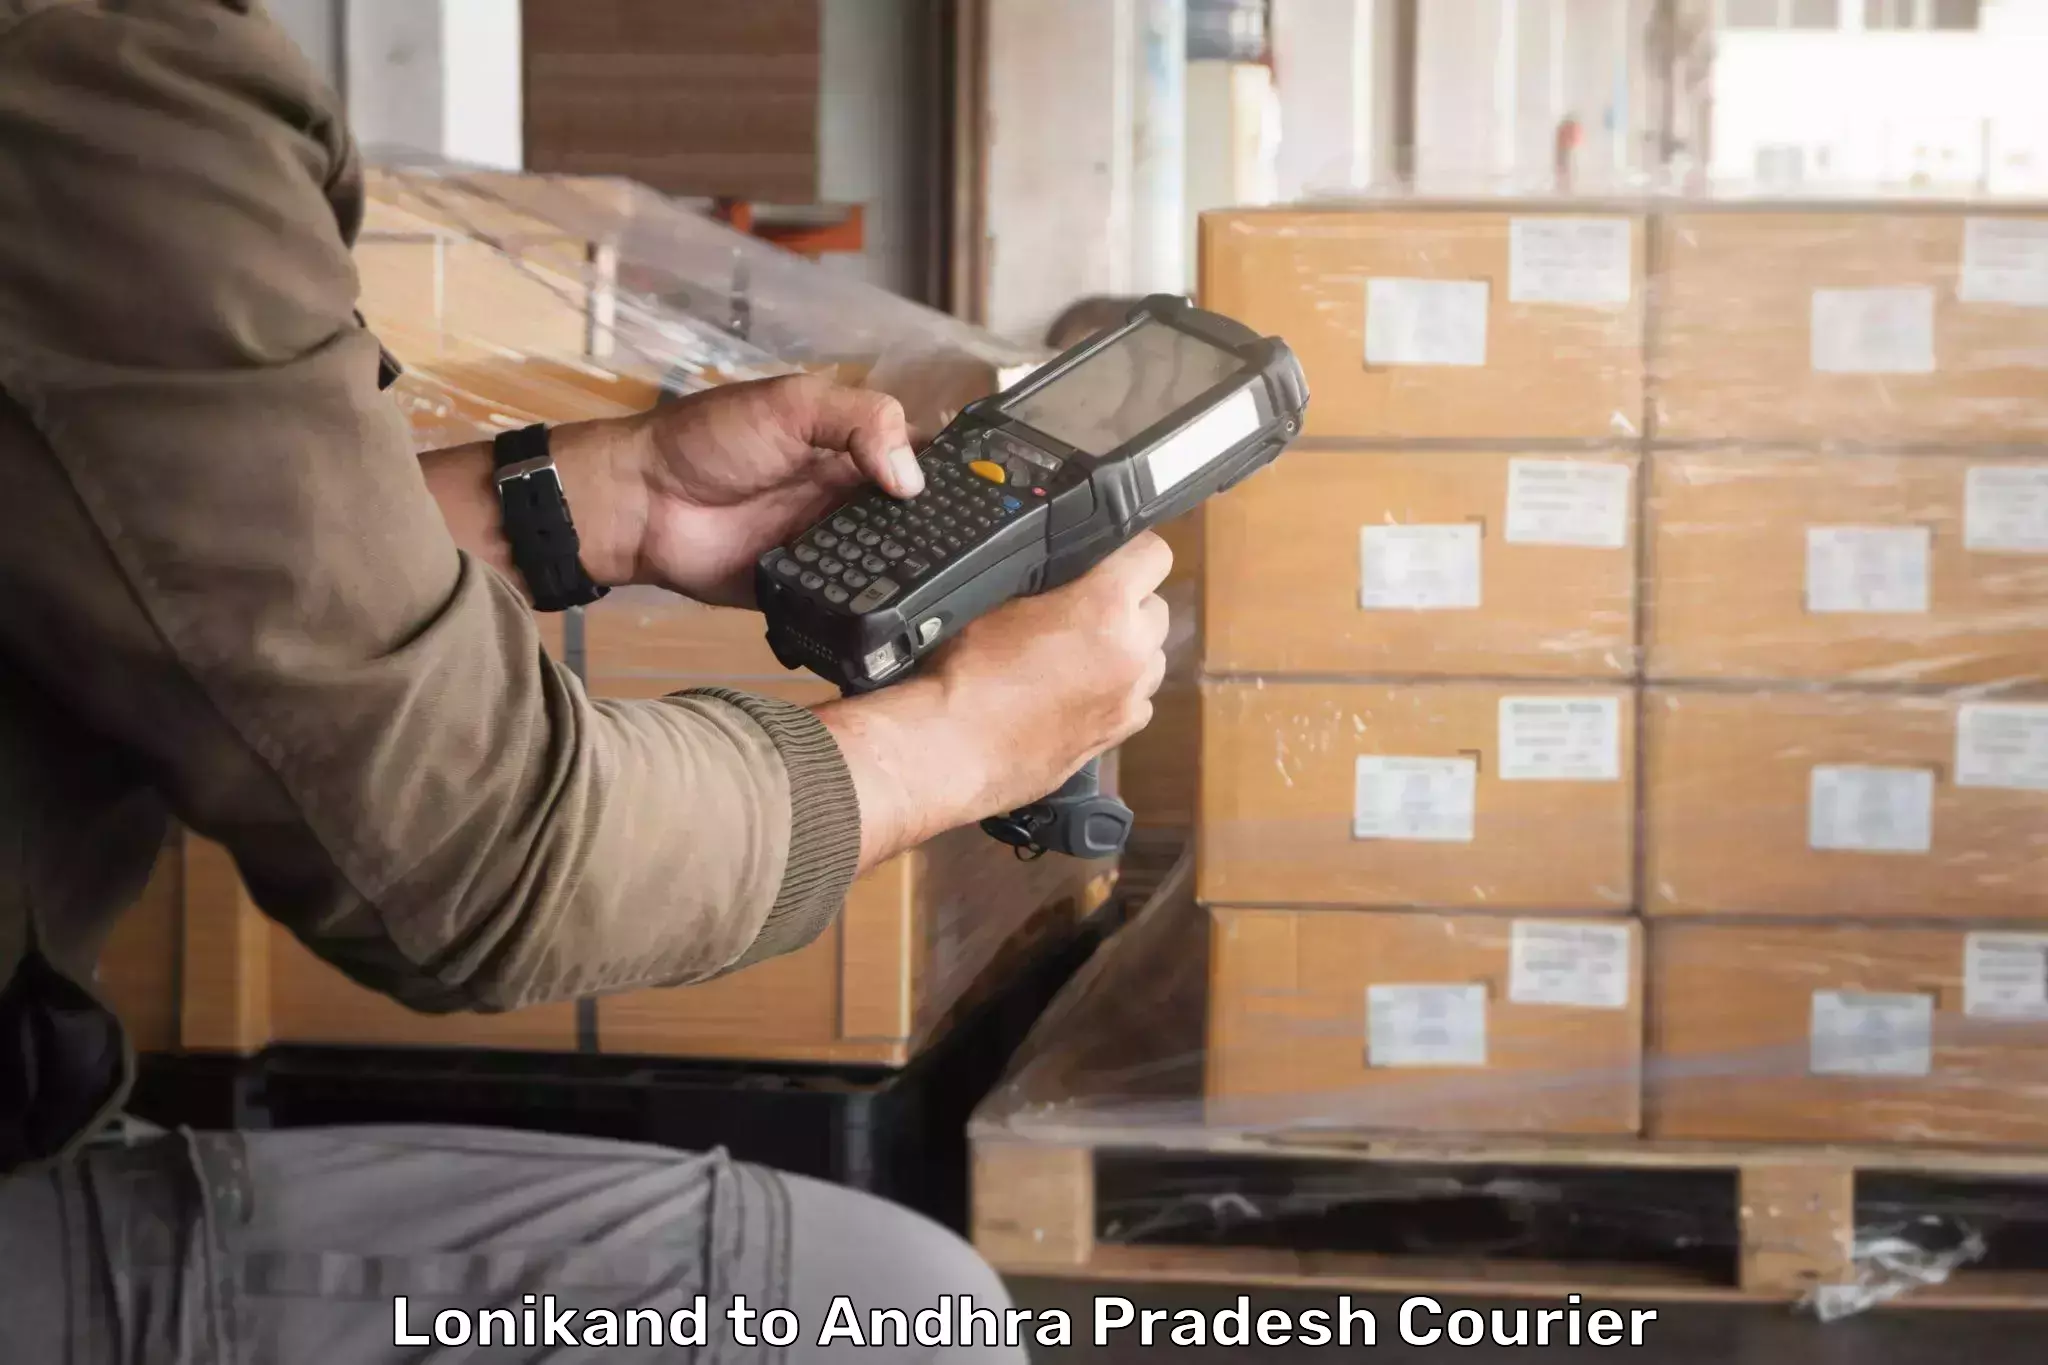 Courier service partnerships Lonikand to Andhra Pradesh